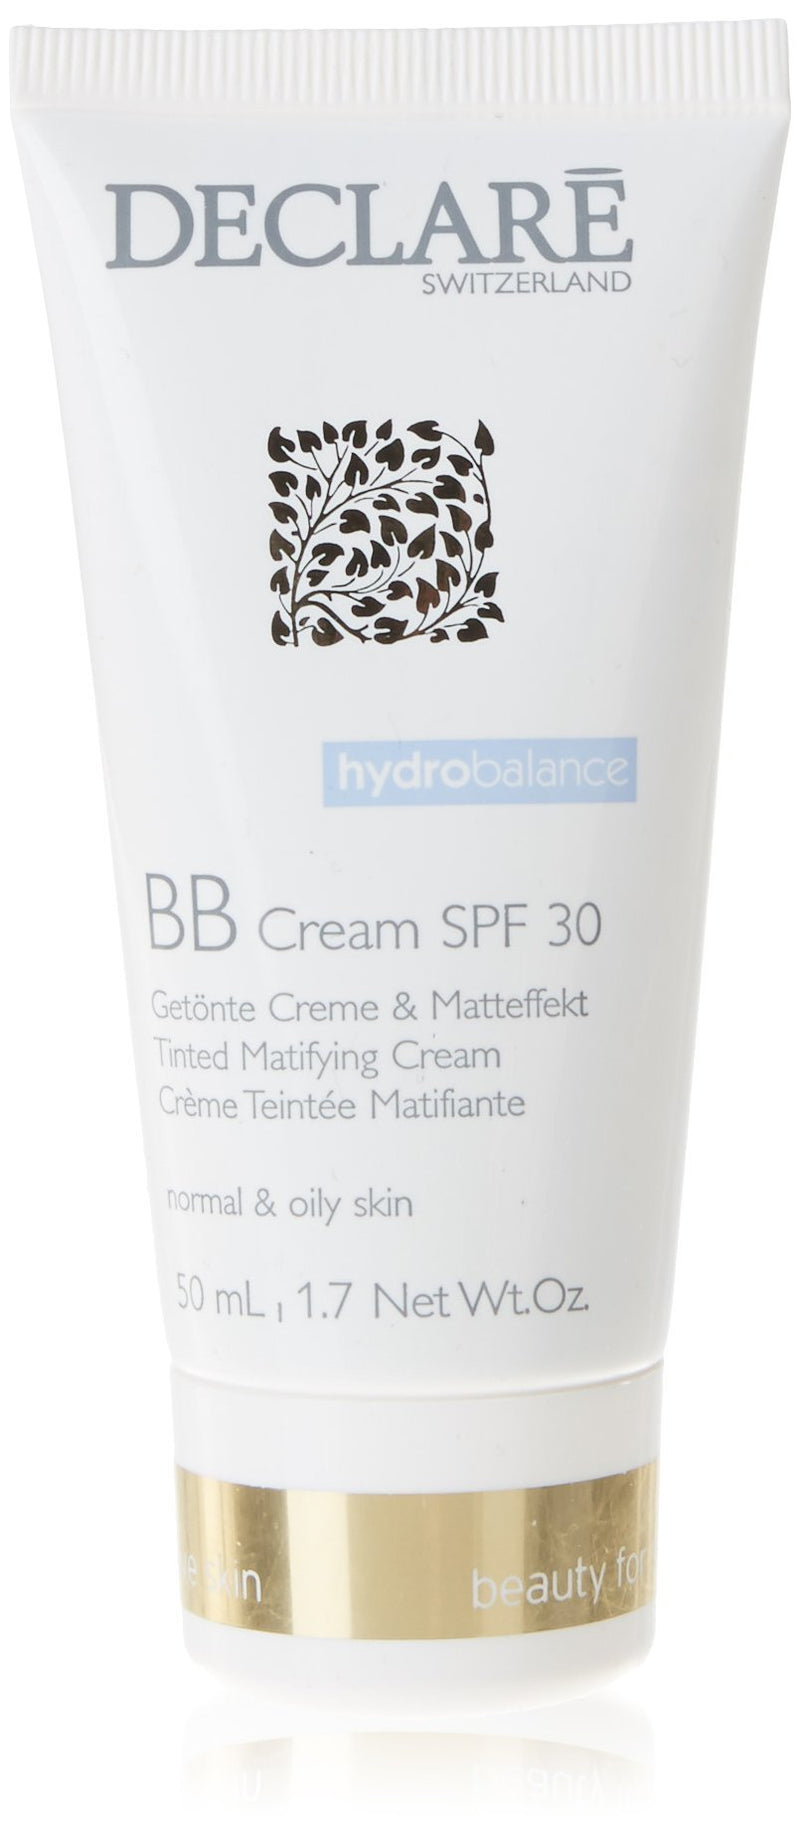 Declare Hydro Balance SPF 30 BB Cream - NewNest Australia